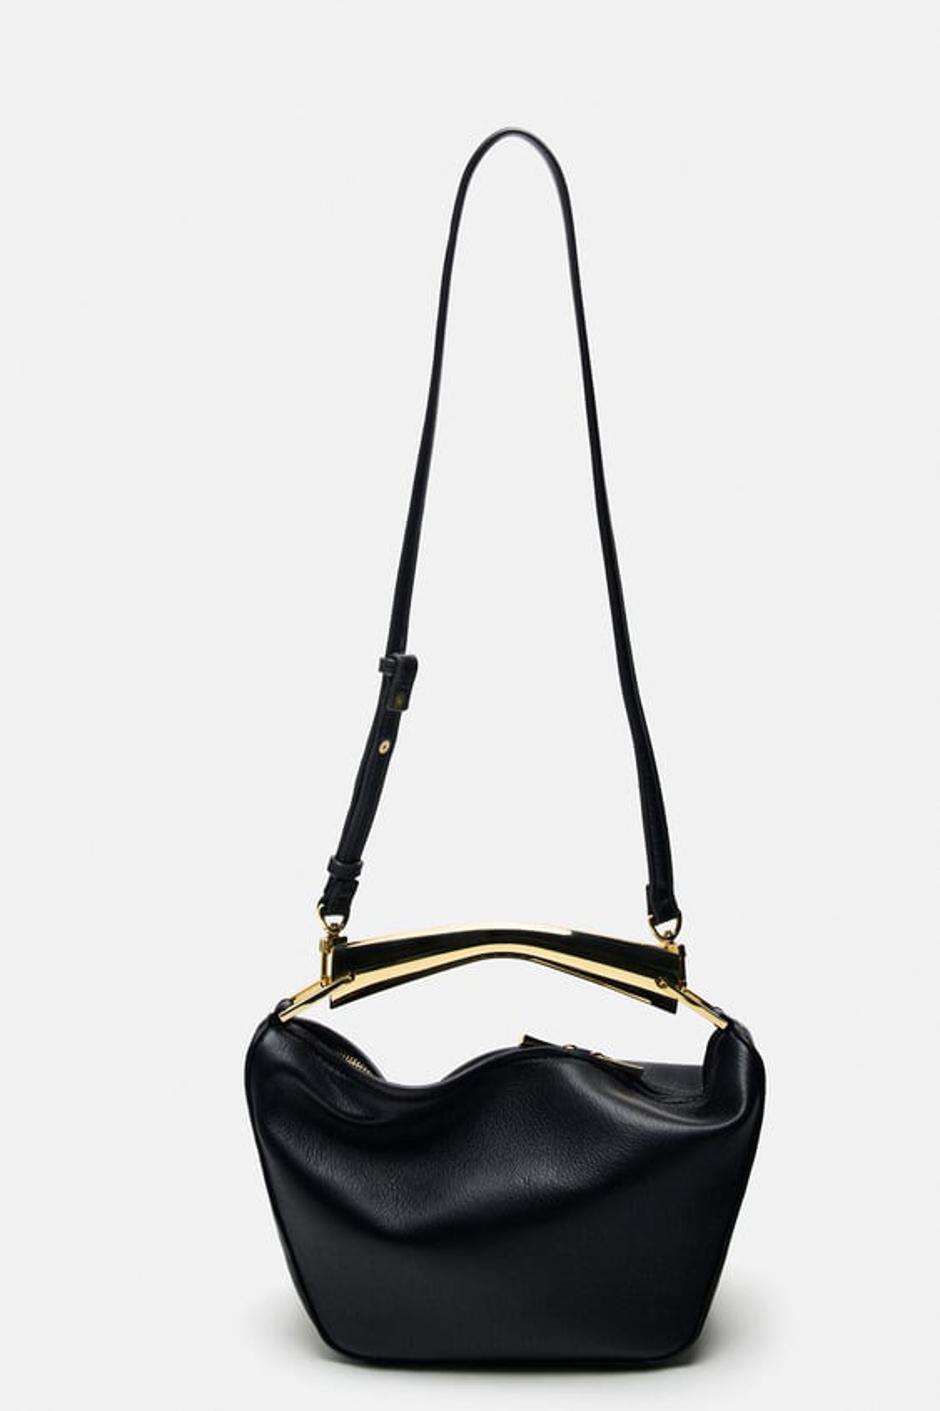 Foto: Zara, crna torba sa zlatnom metalnom ručkom | Autor: Zara